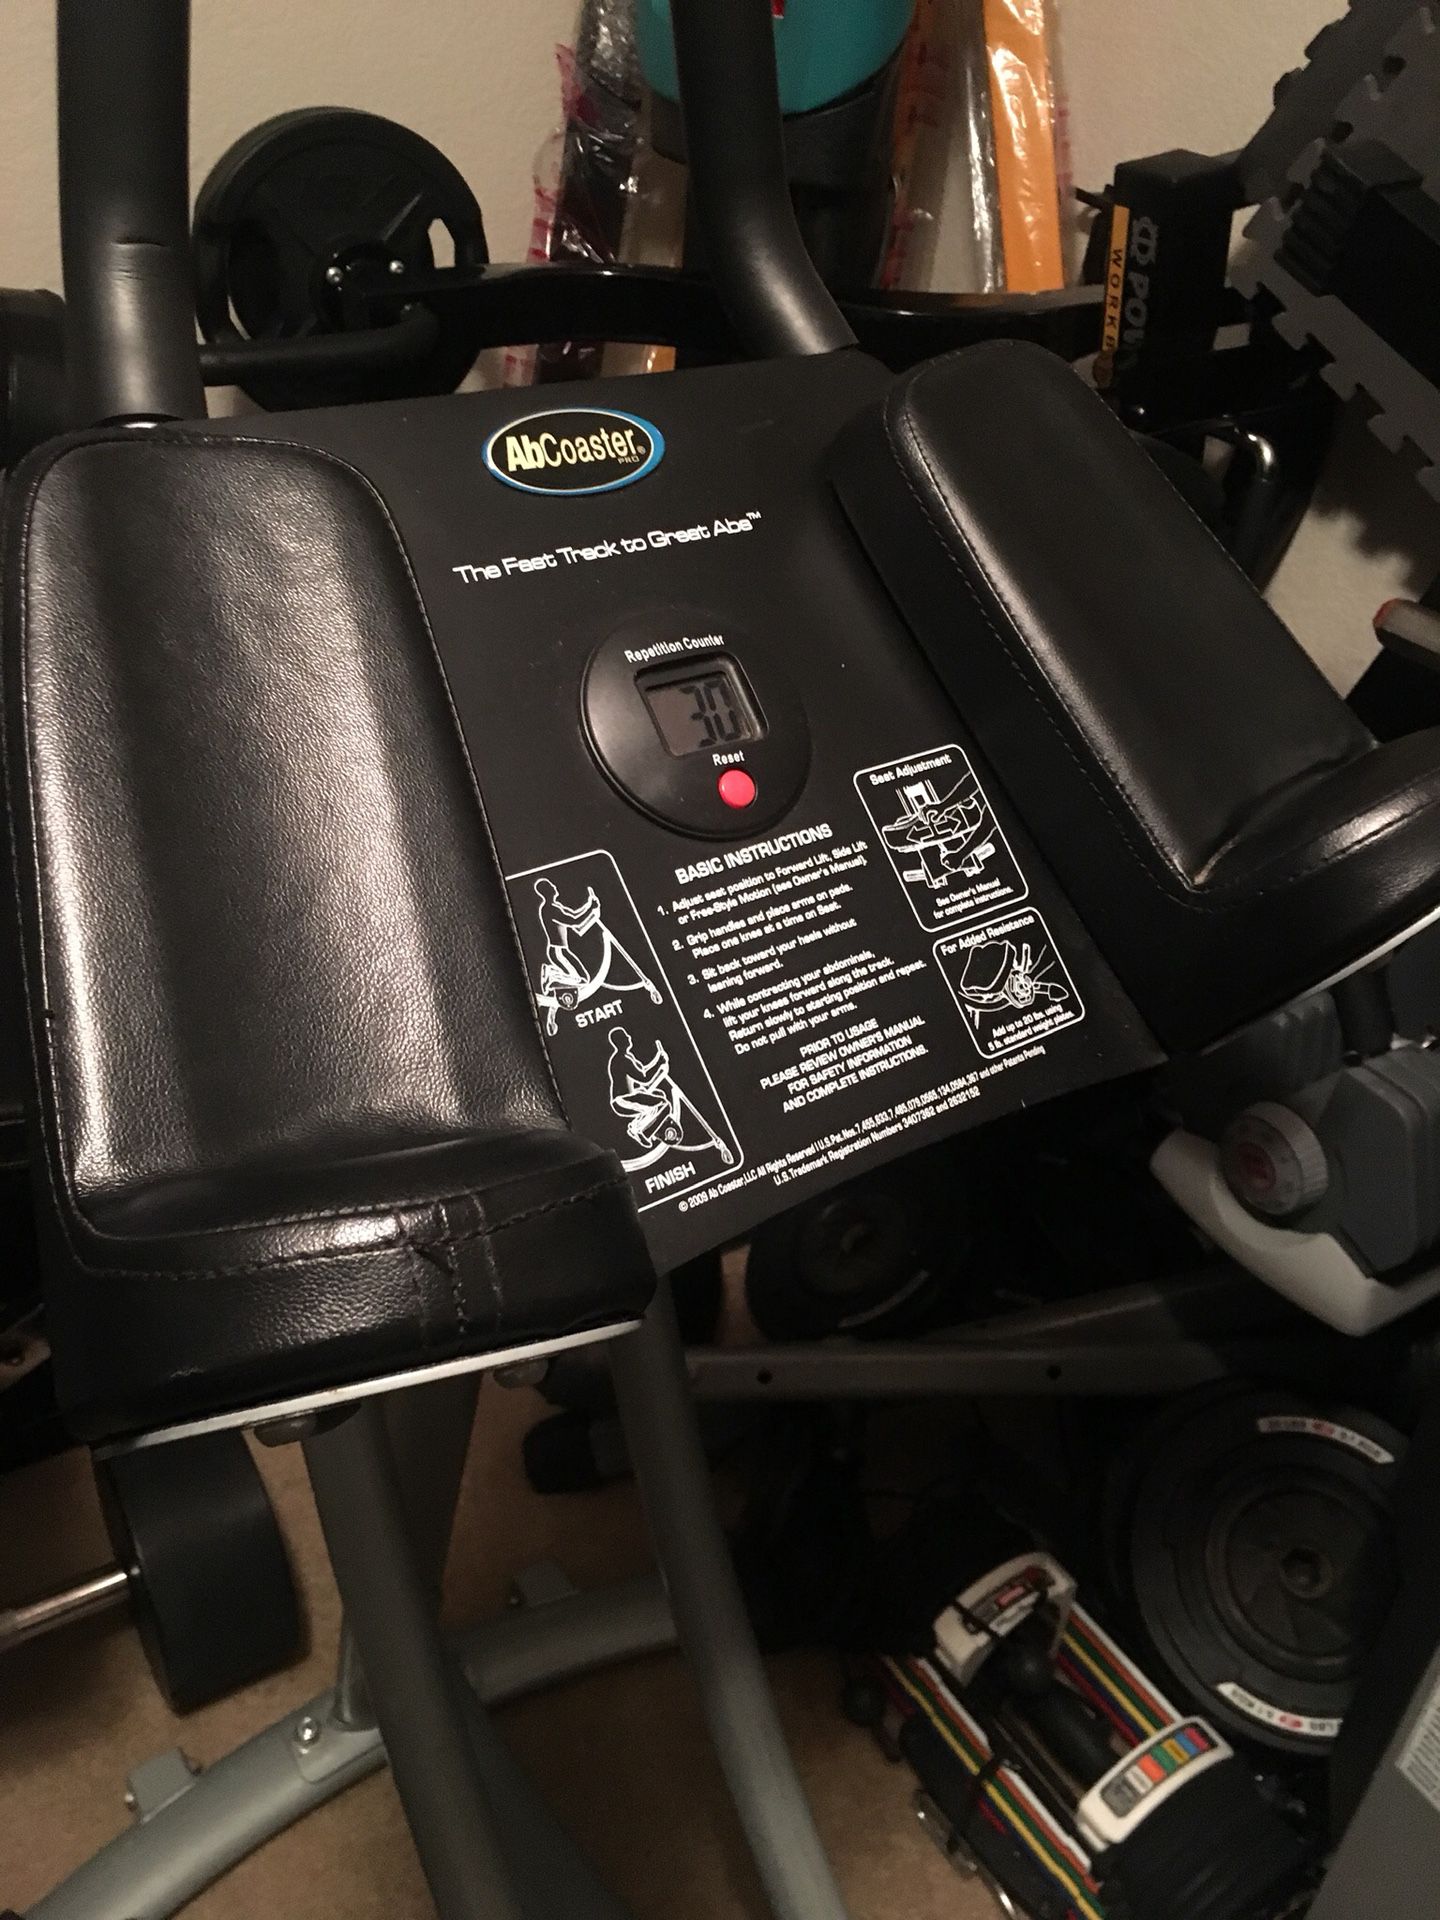 Abcoaster workout machine